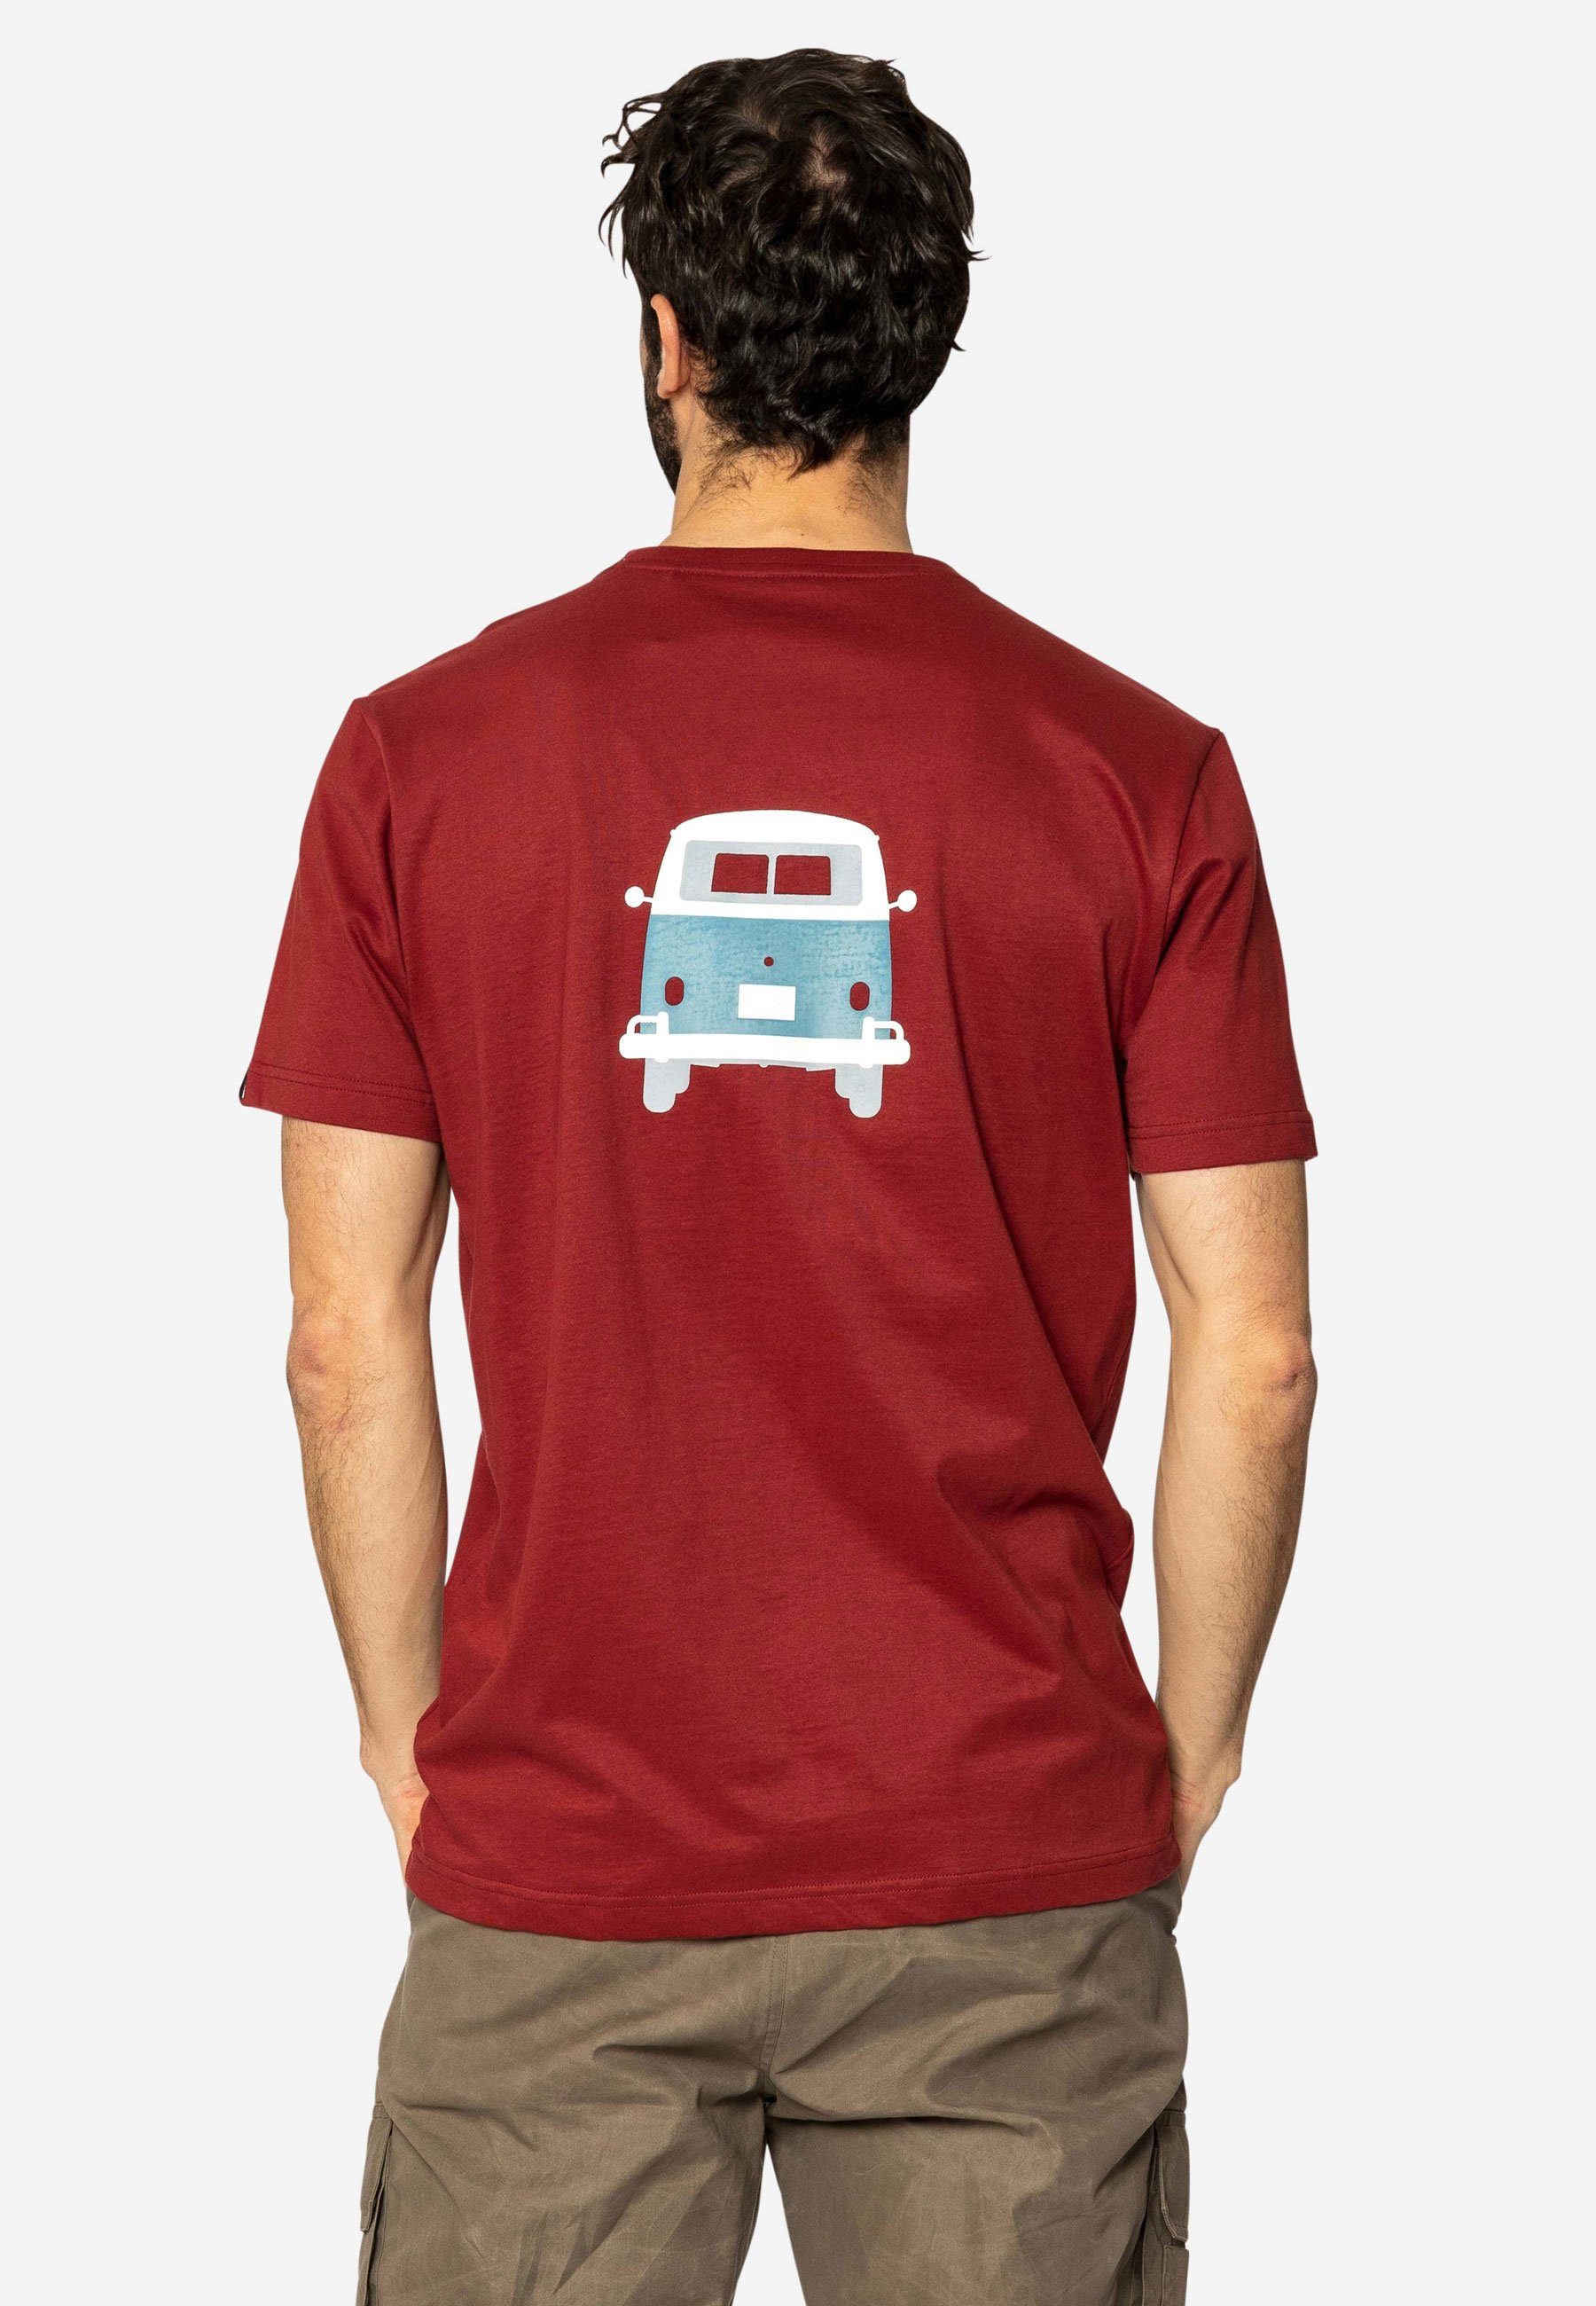 VW Bulli Print syrahred Brust Elkline Methusalem lizenzierter Rücken T-Shirt